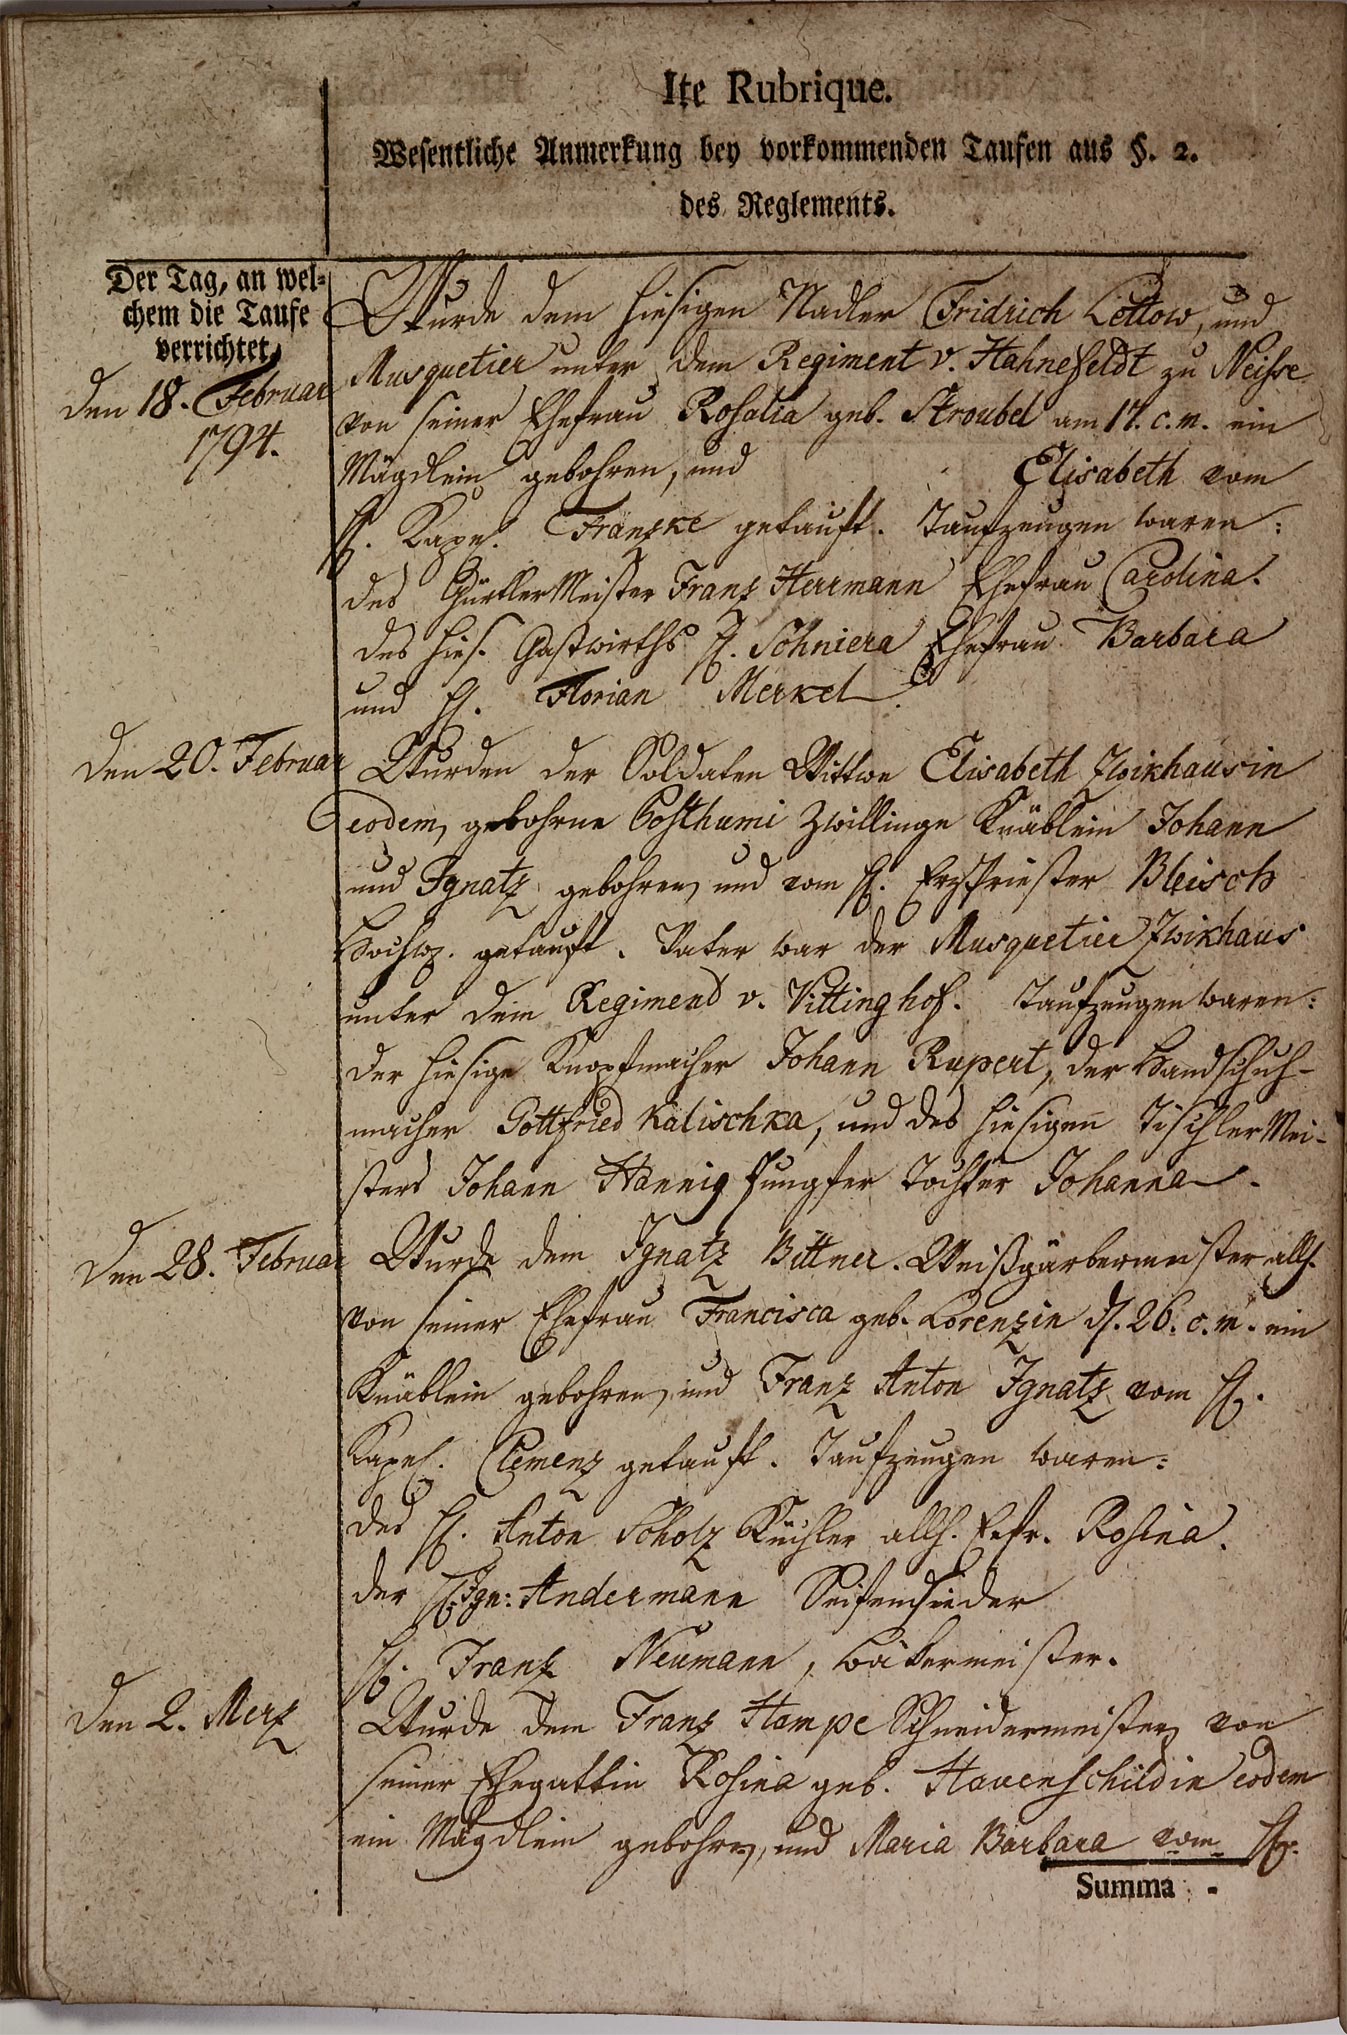 Kirchenbuch 1793 Seite 23